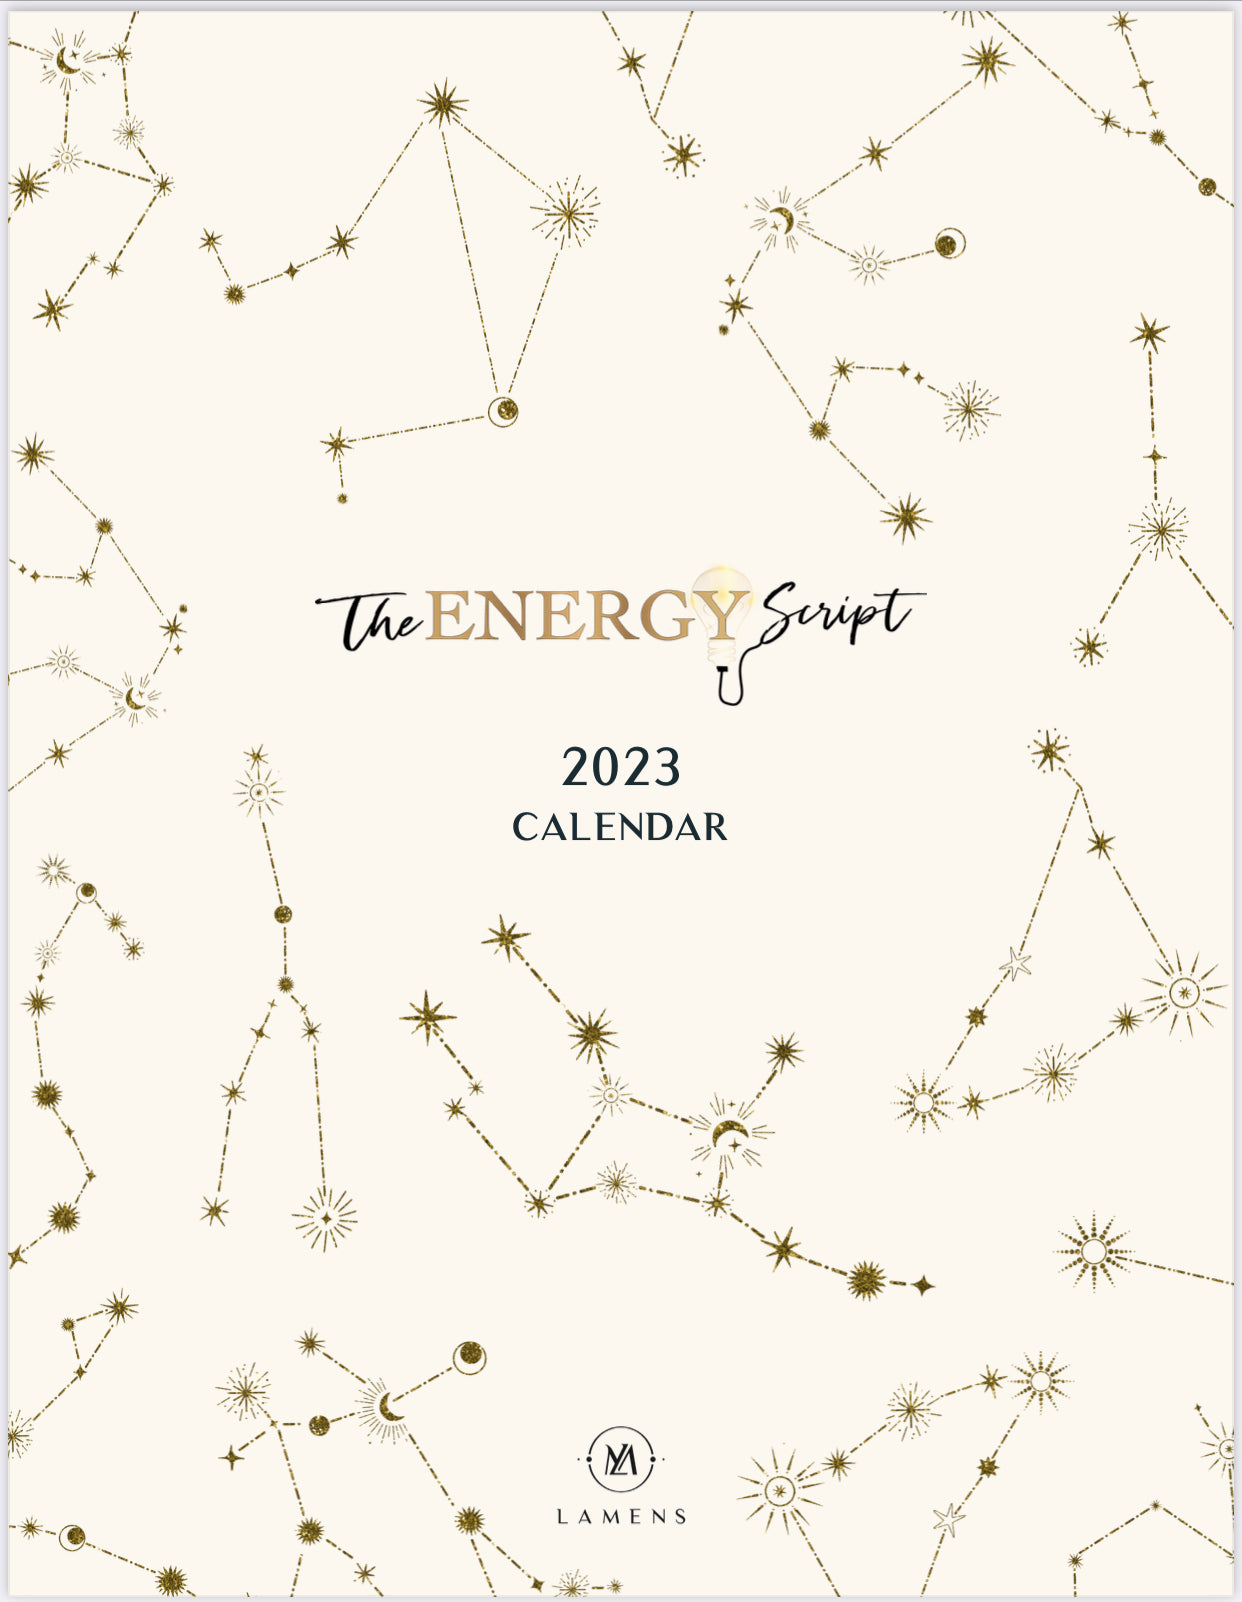 The Energy Script 2023 Astrology Calendar